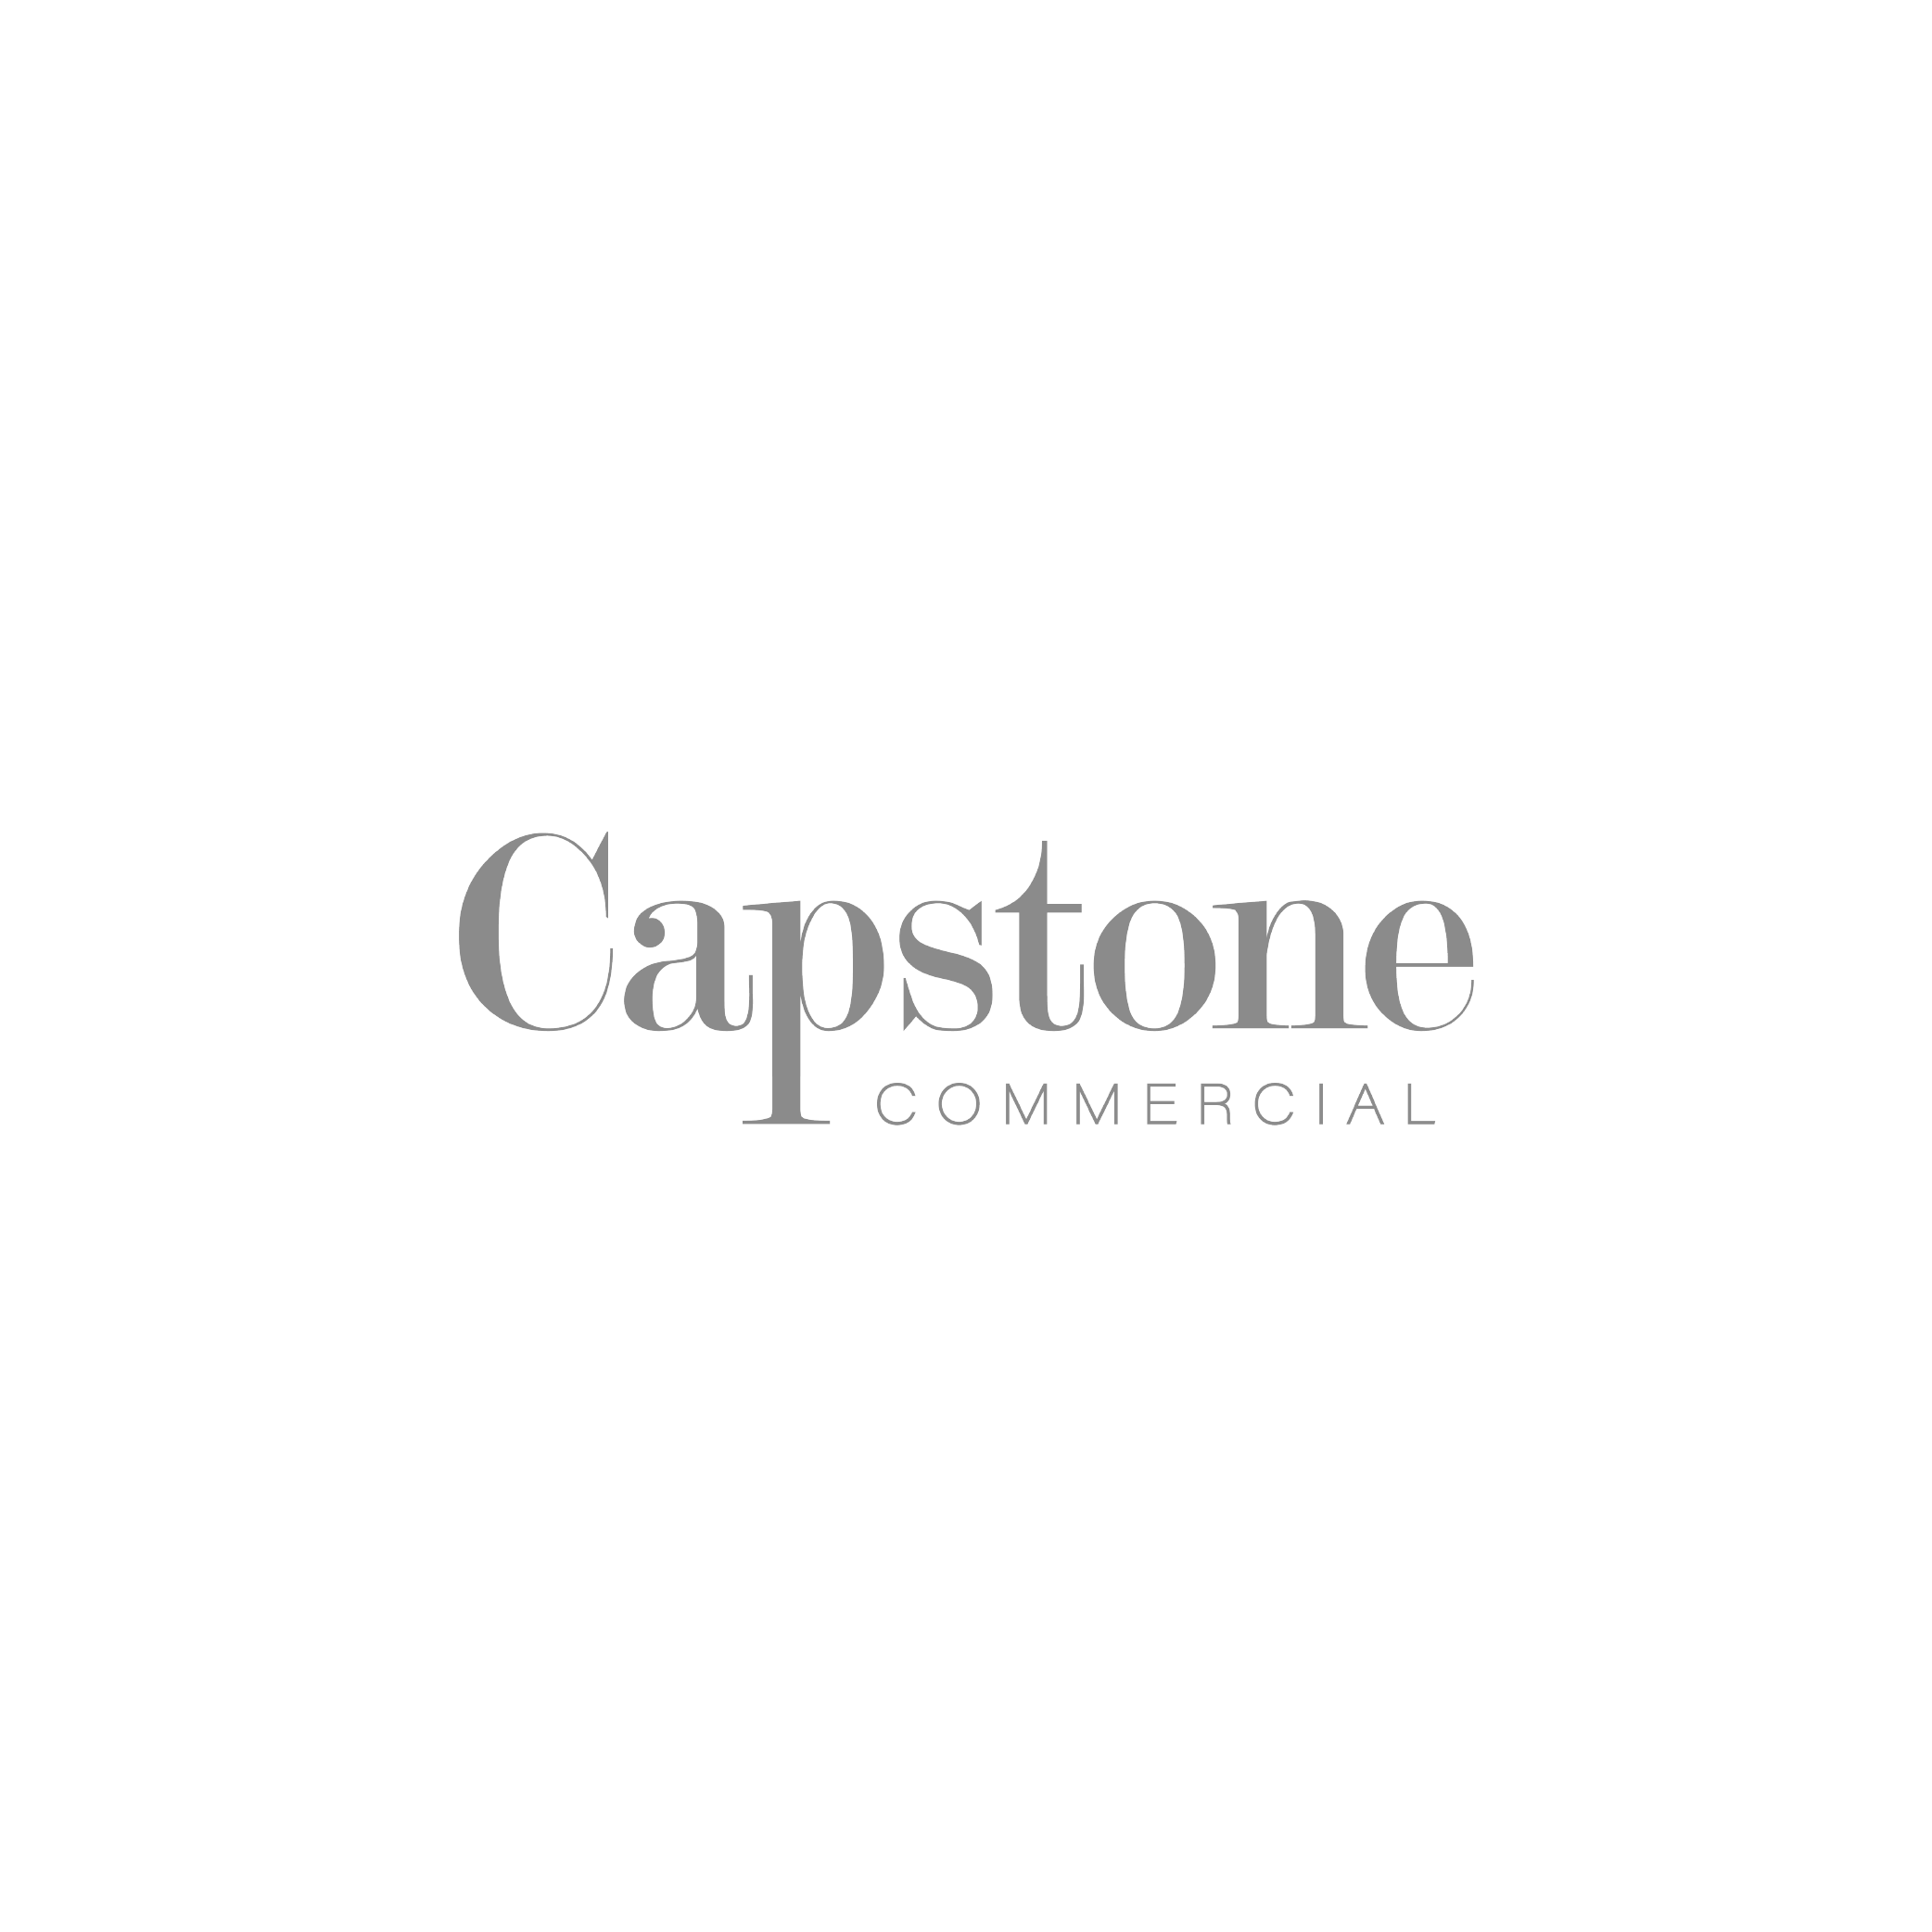 Capstone Logo - Oakmont Creative